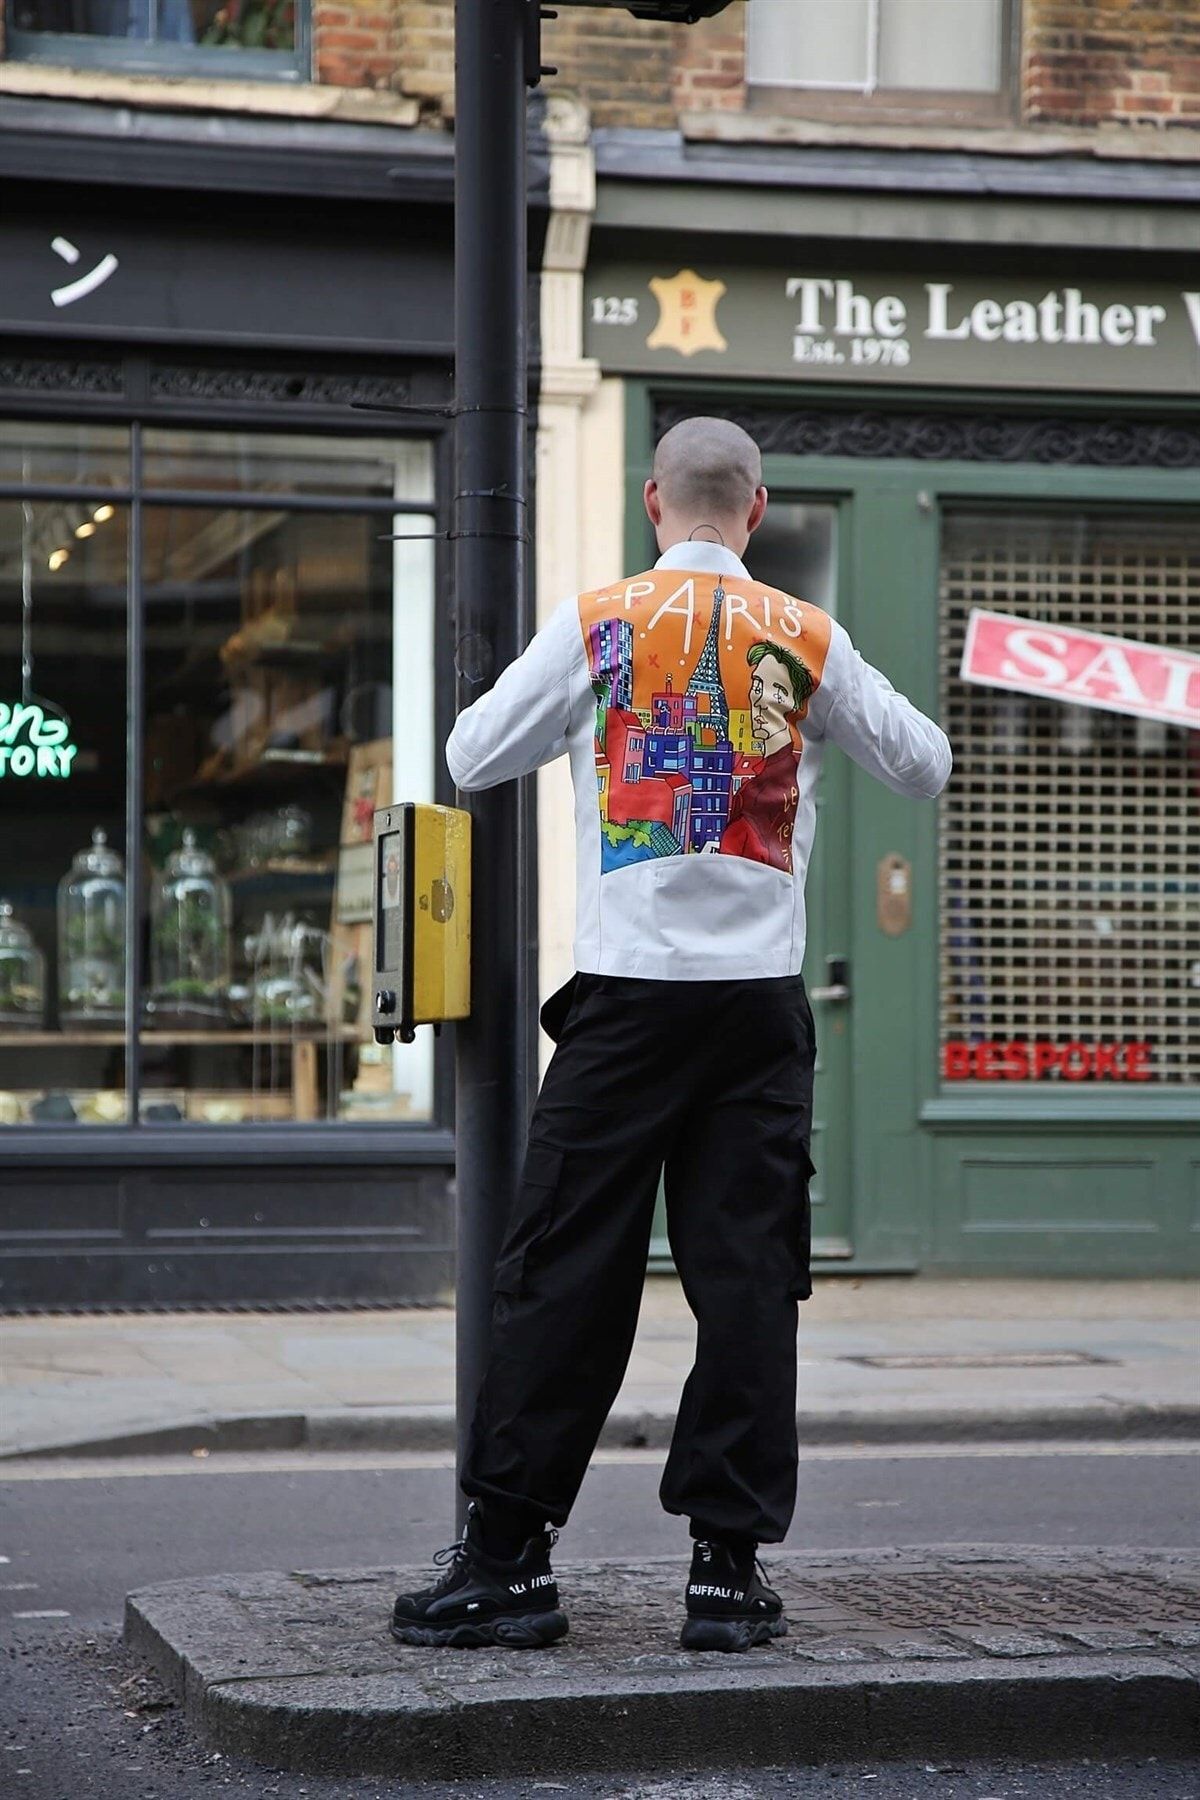 Deriderim کت چرم اصل مردانه با خط زیپ دار چاپ دیجیتال طراحی ویژه ایکیگای پاریسی